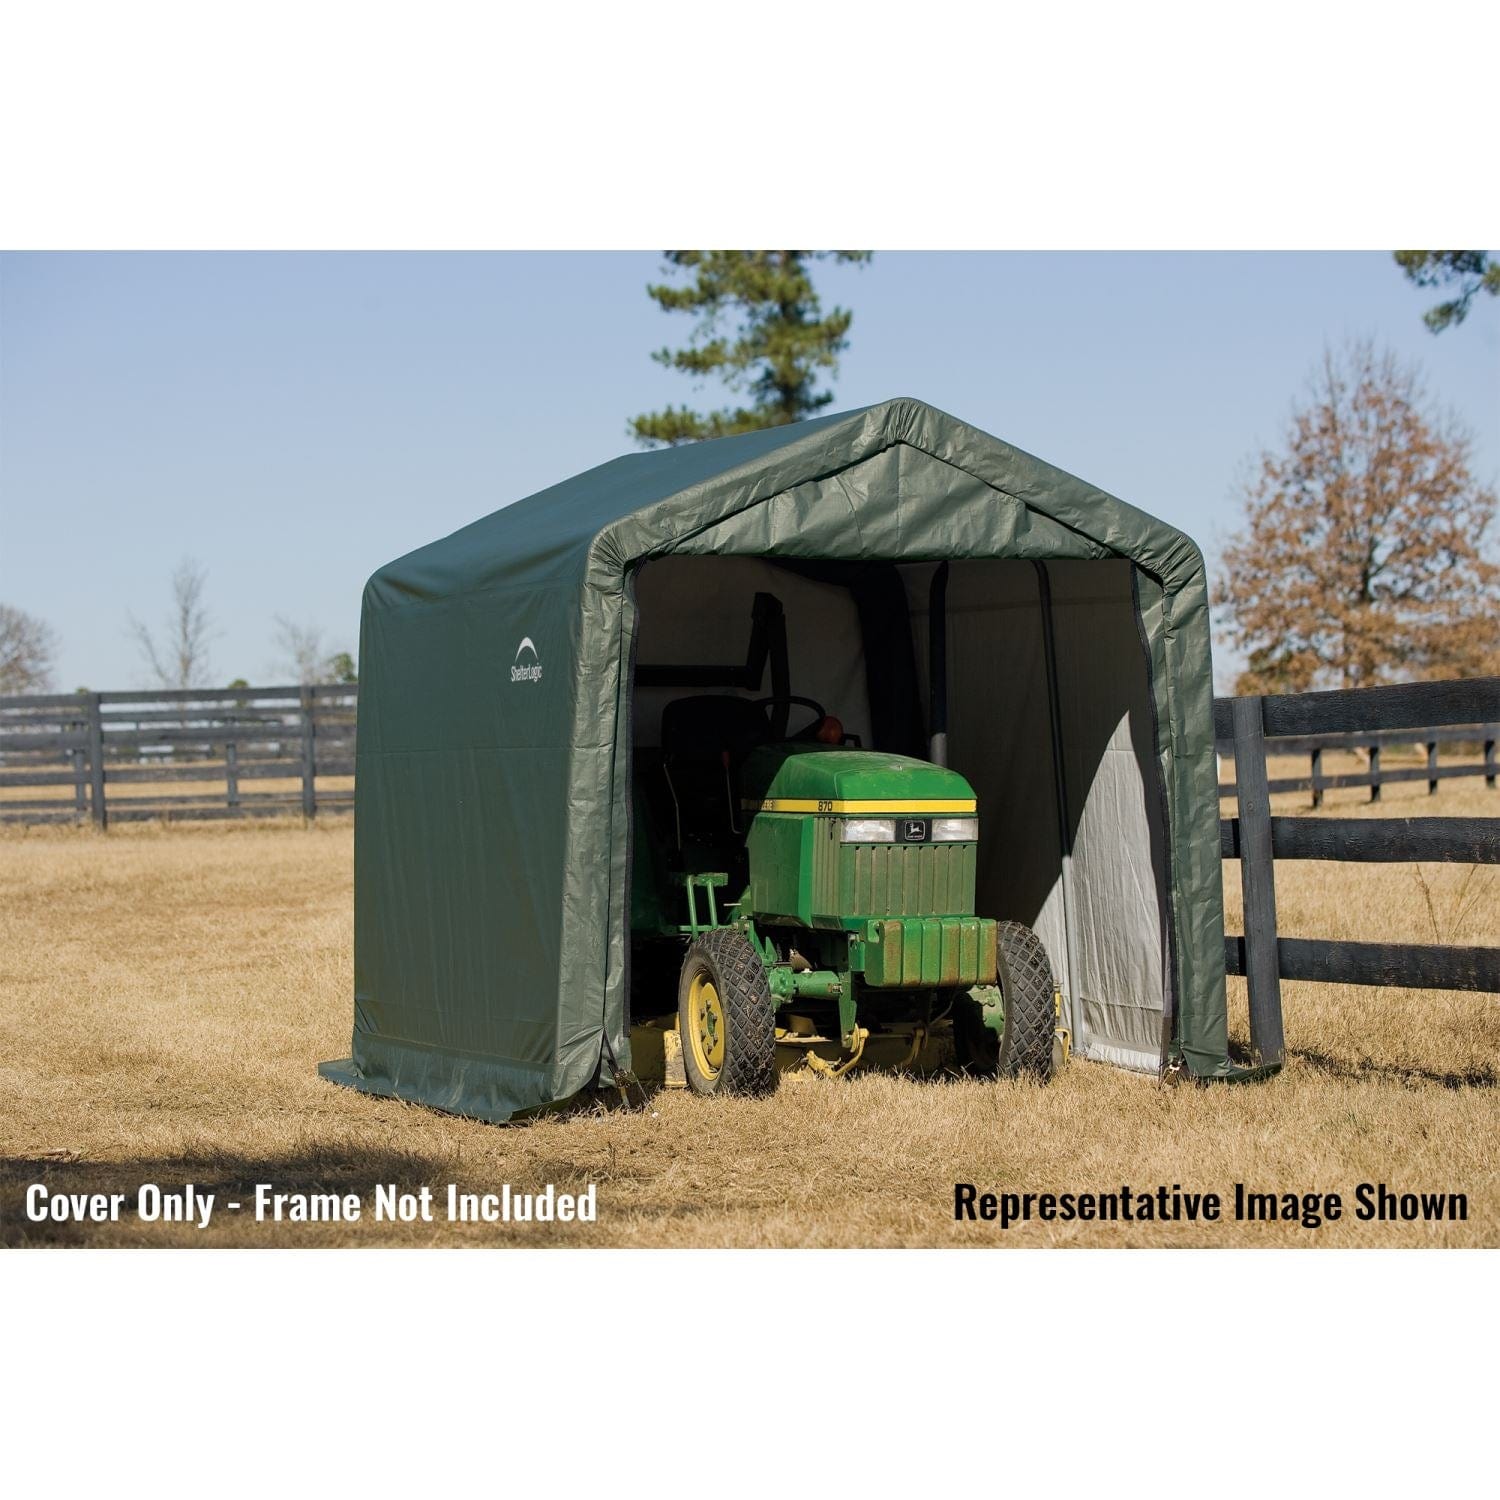 ShelterLogic Portable Garage ShelterLogic | ShelterCoat 11 x 8 ft. Garage Peak Green STD 72854